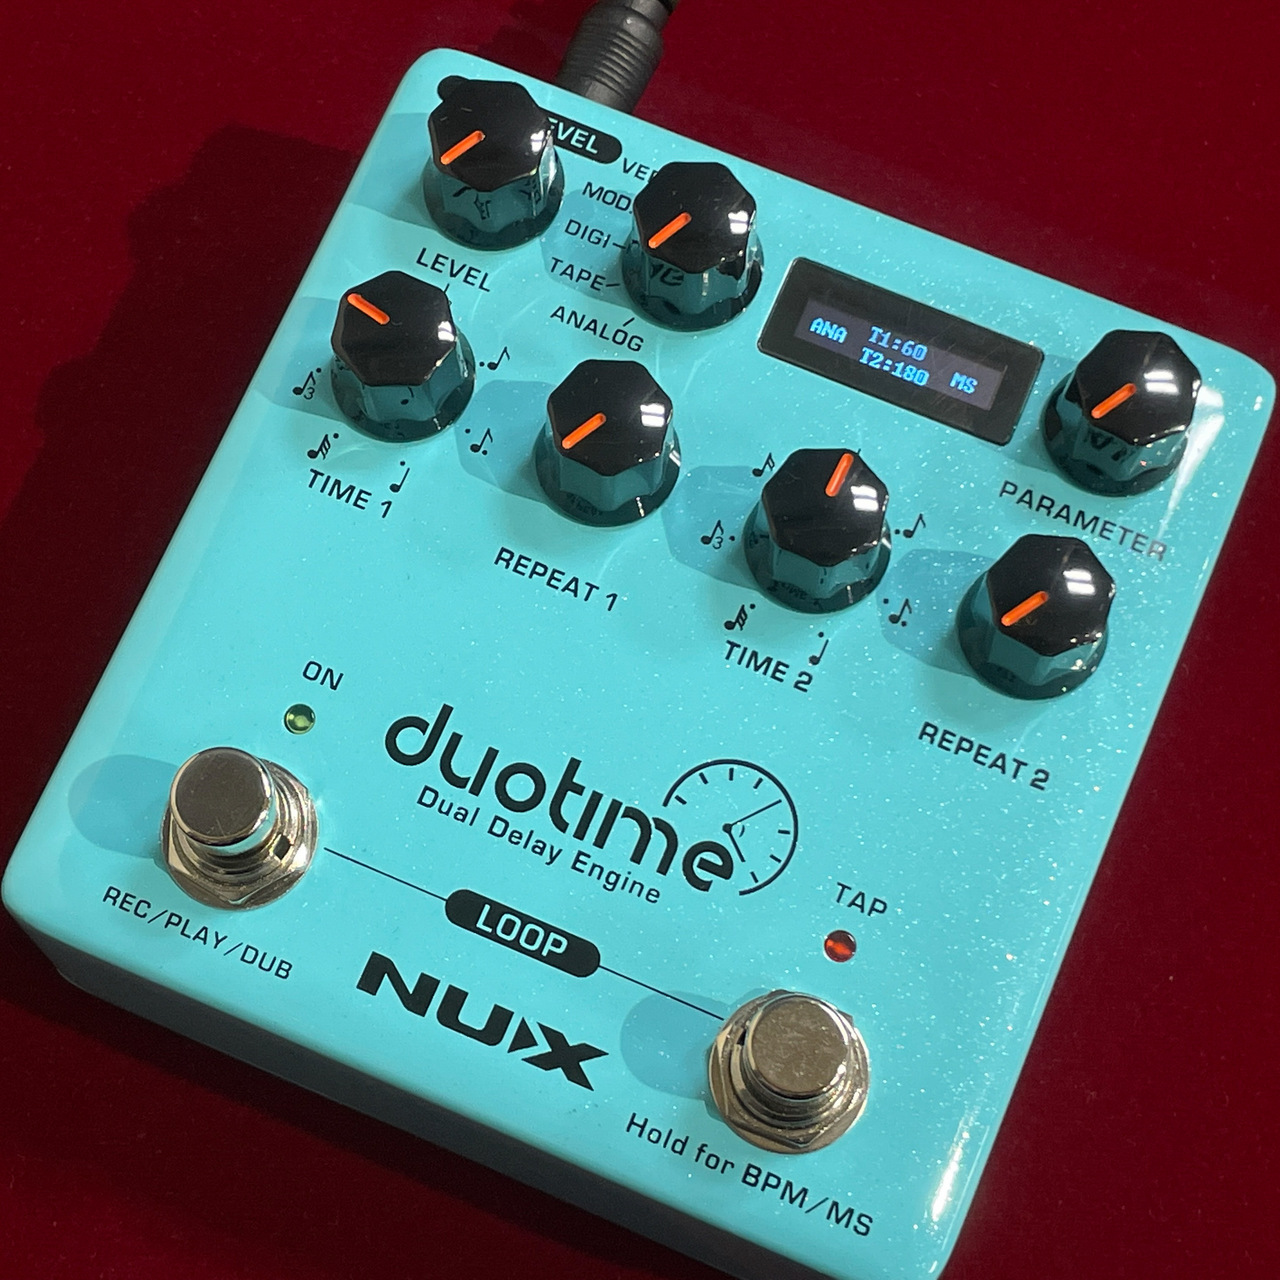 NUX / Duotime (NDD-6) ディレイペダル